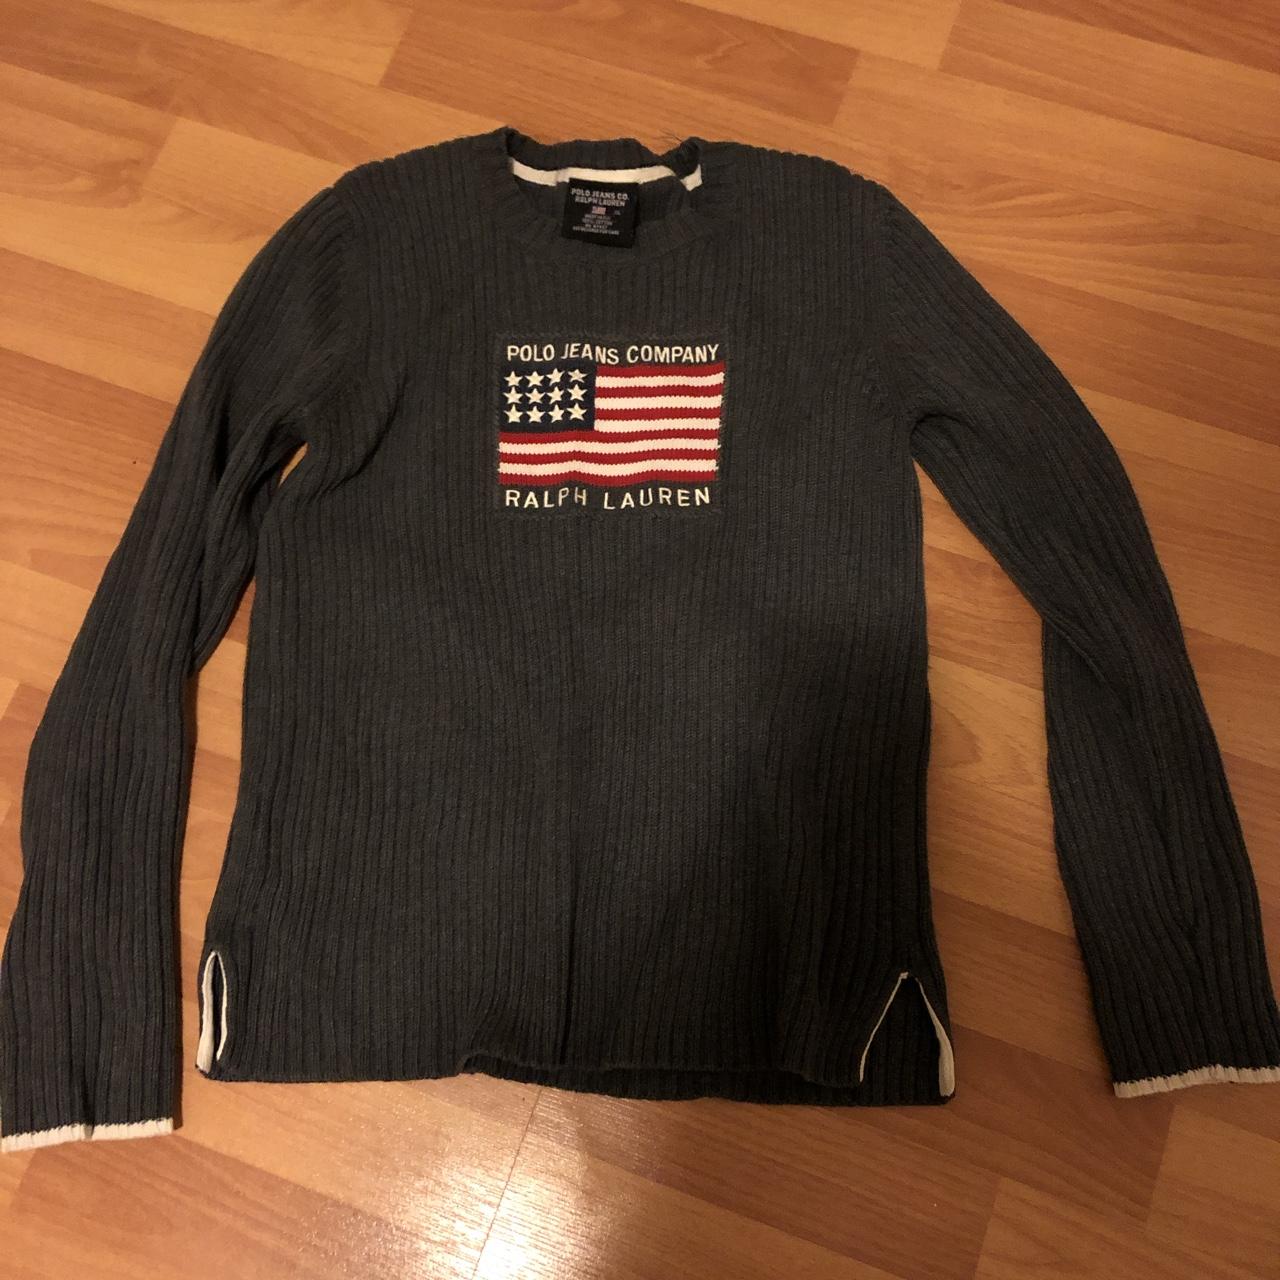 Ralph Lauren American flag sweater (size XL but fits